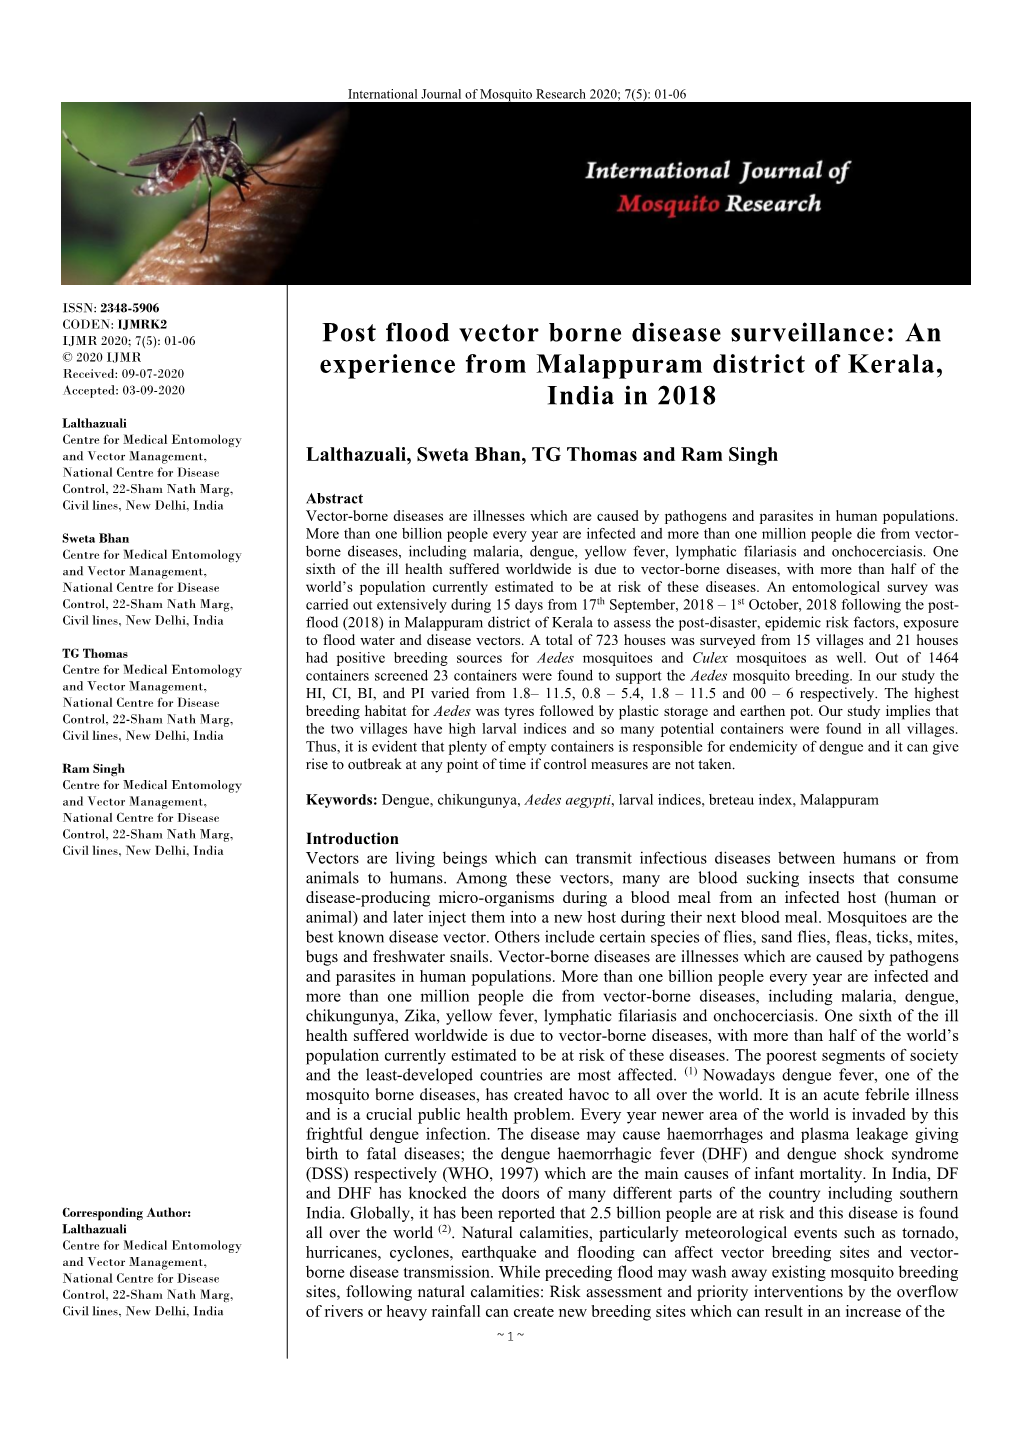 Post Flood Vector Borne Disease Surveillance